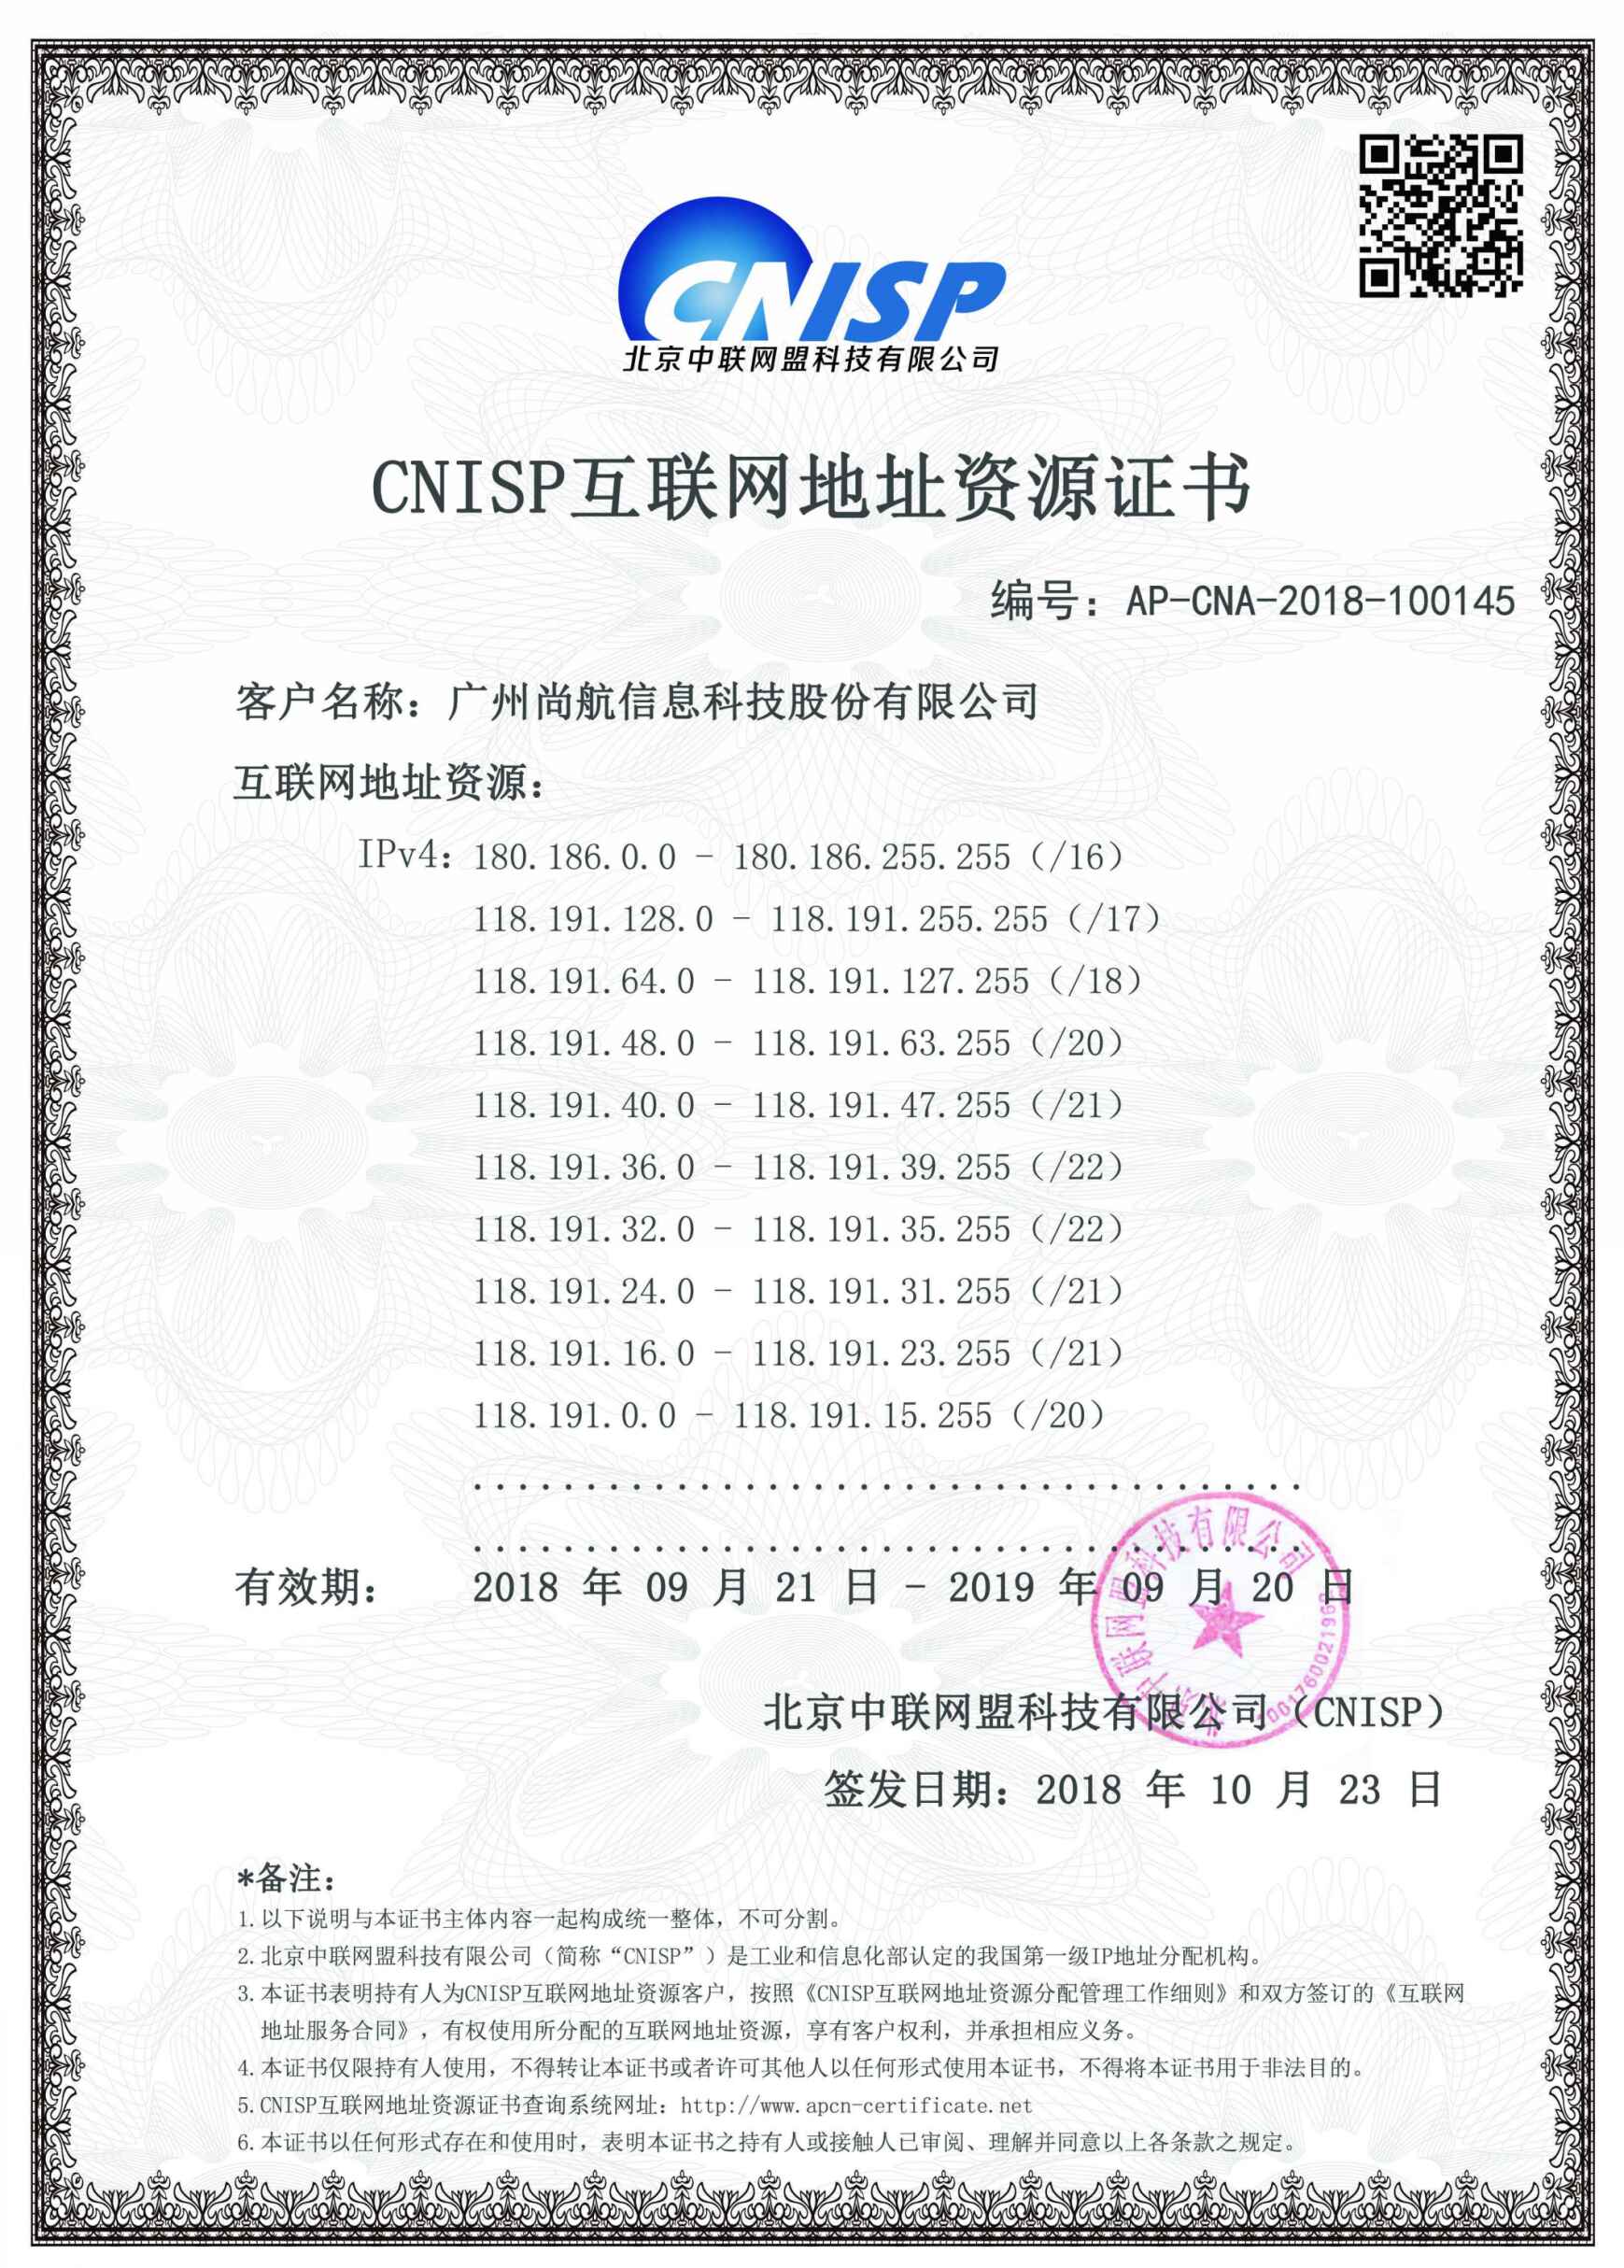 CNISP地址资源证书